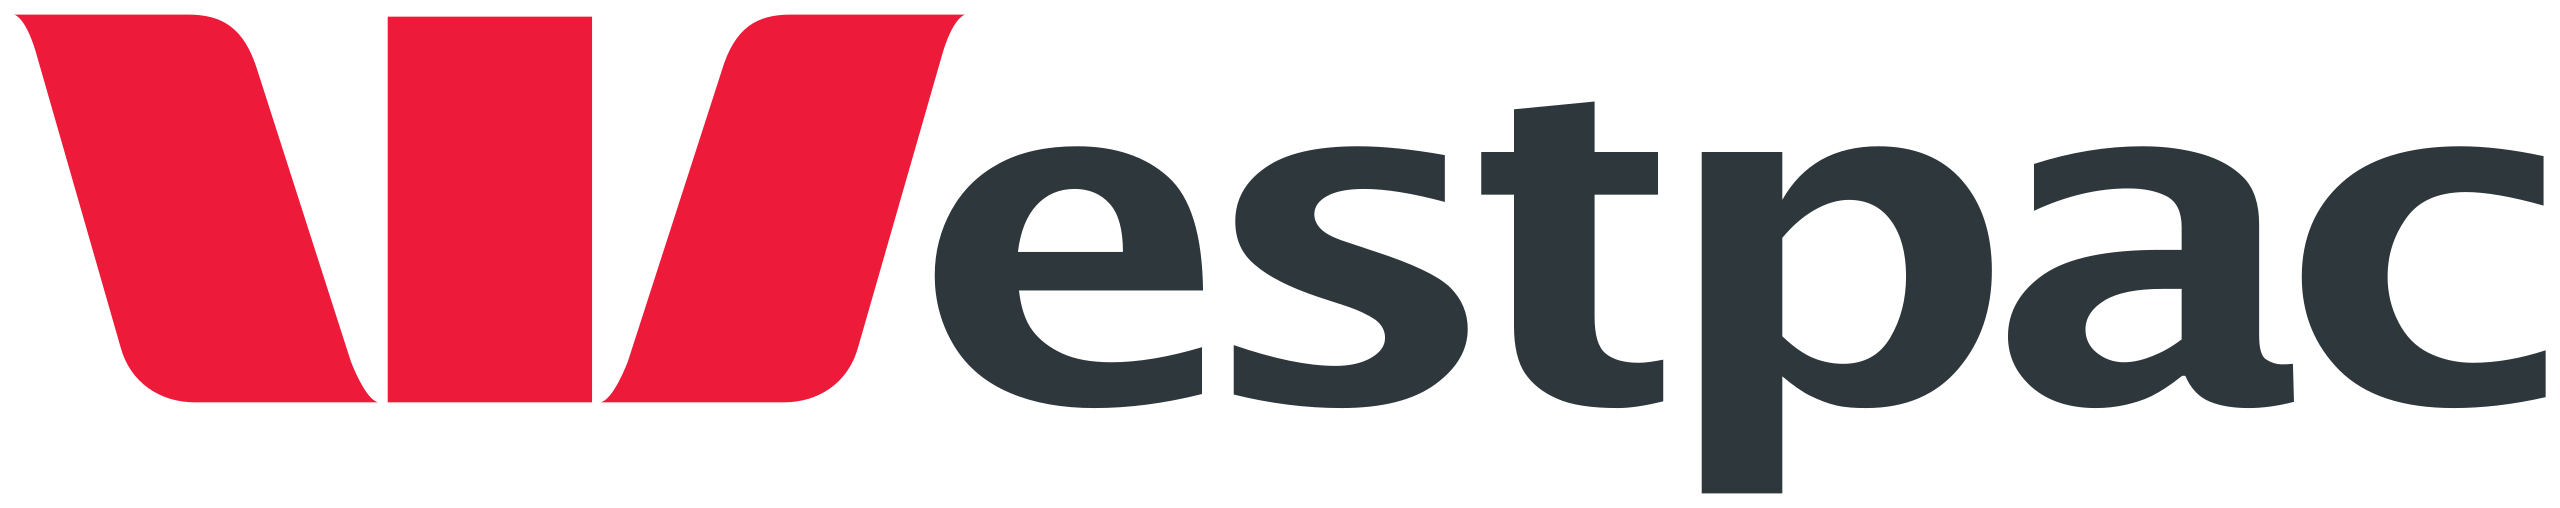 Westpac company logo